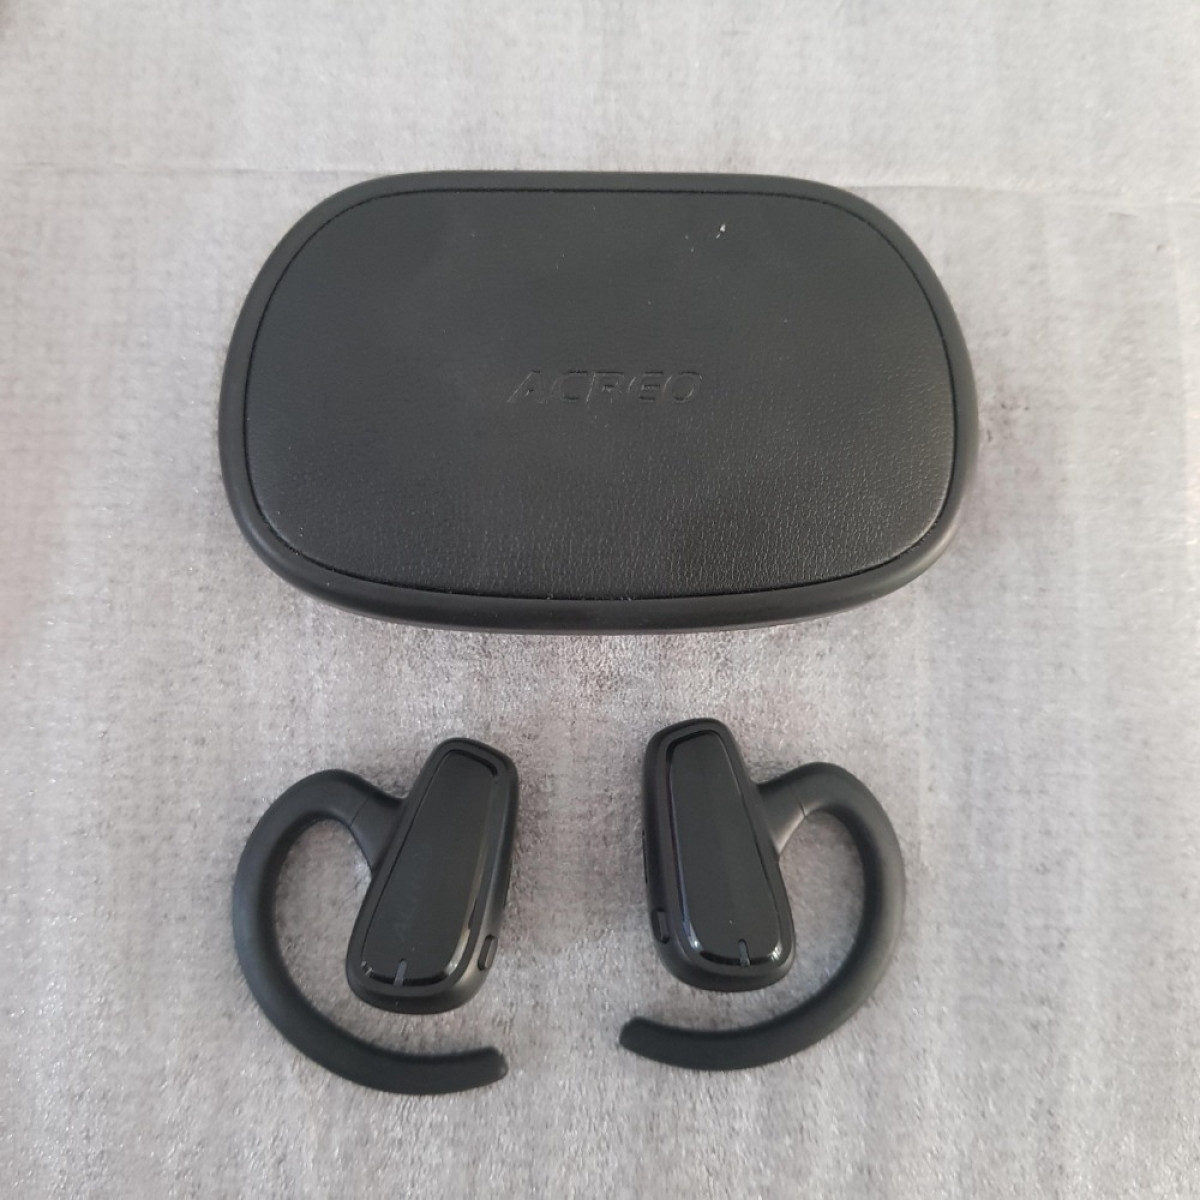 Acreo OpenBuds TWS Earphone Headset Earbuds Bluetooth Sport Earhooks